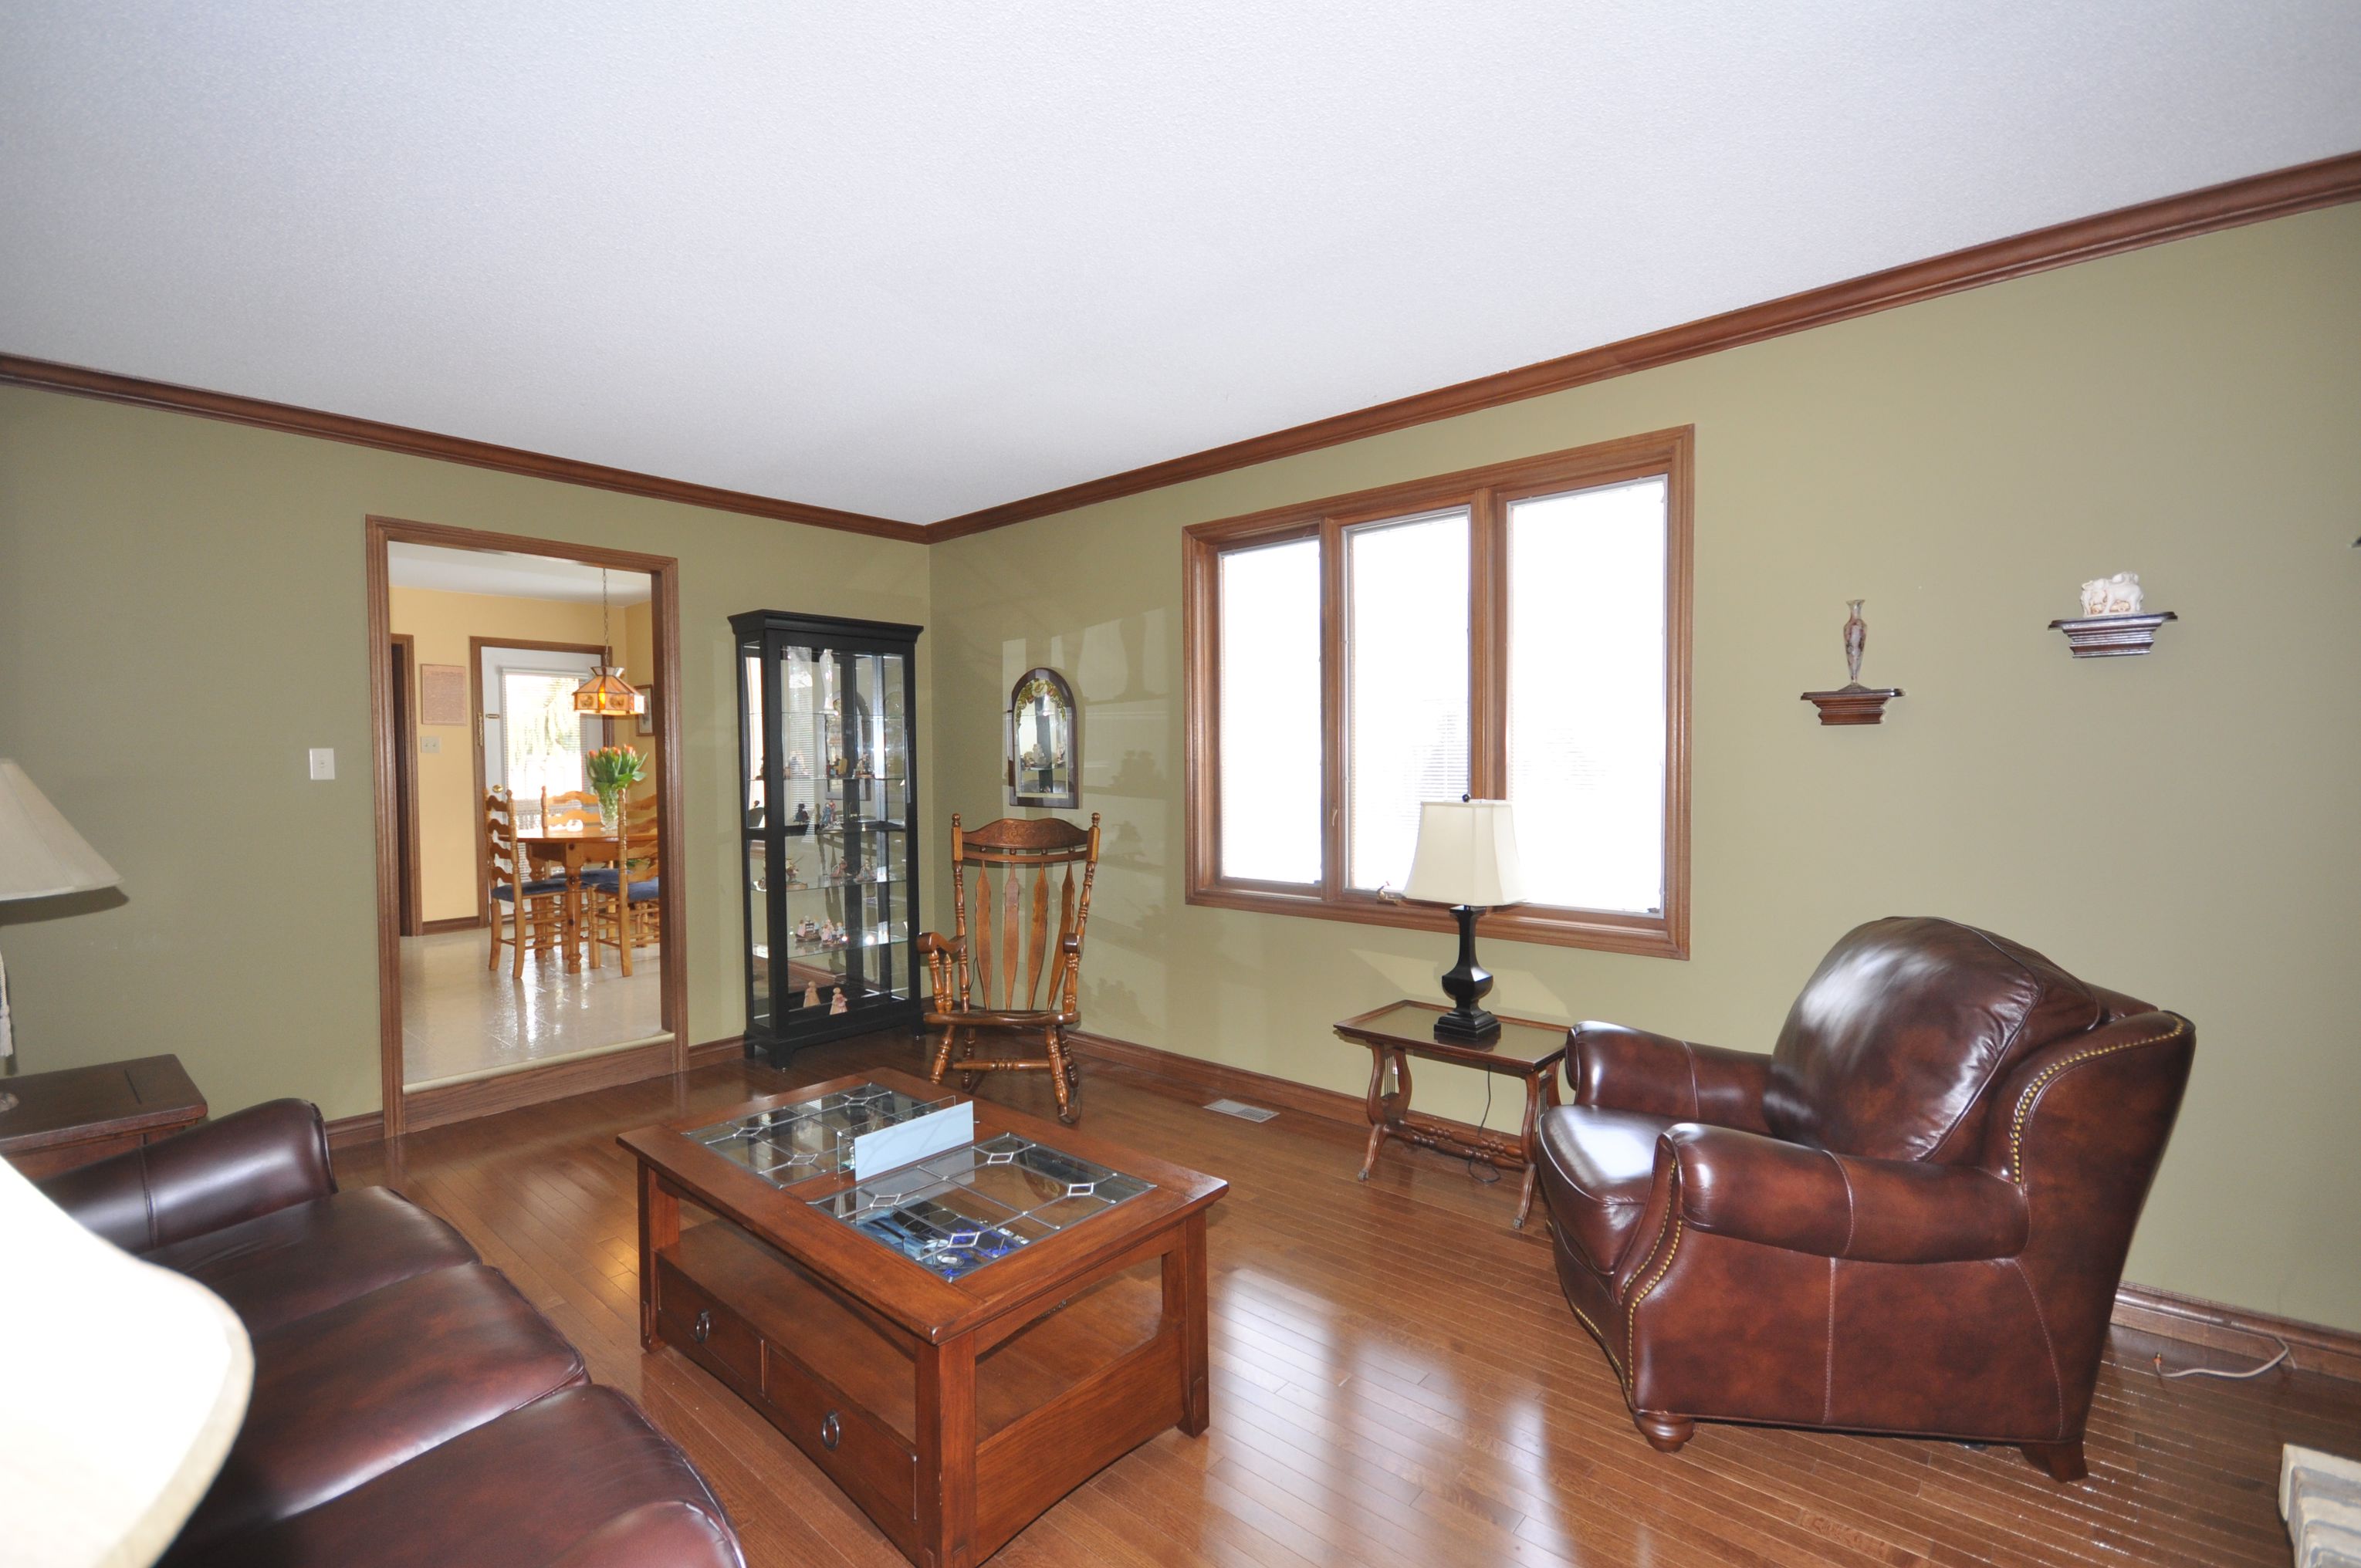 Gleaming oak hardwood flooring, trim & crown moulding in the Family Room